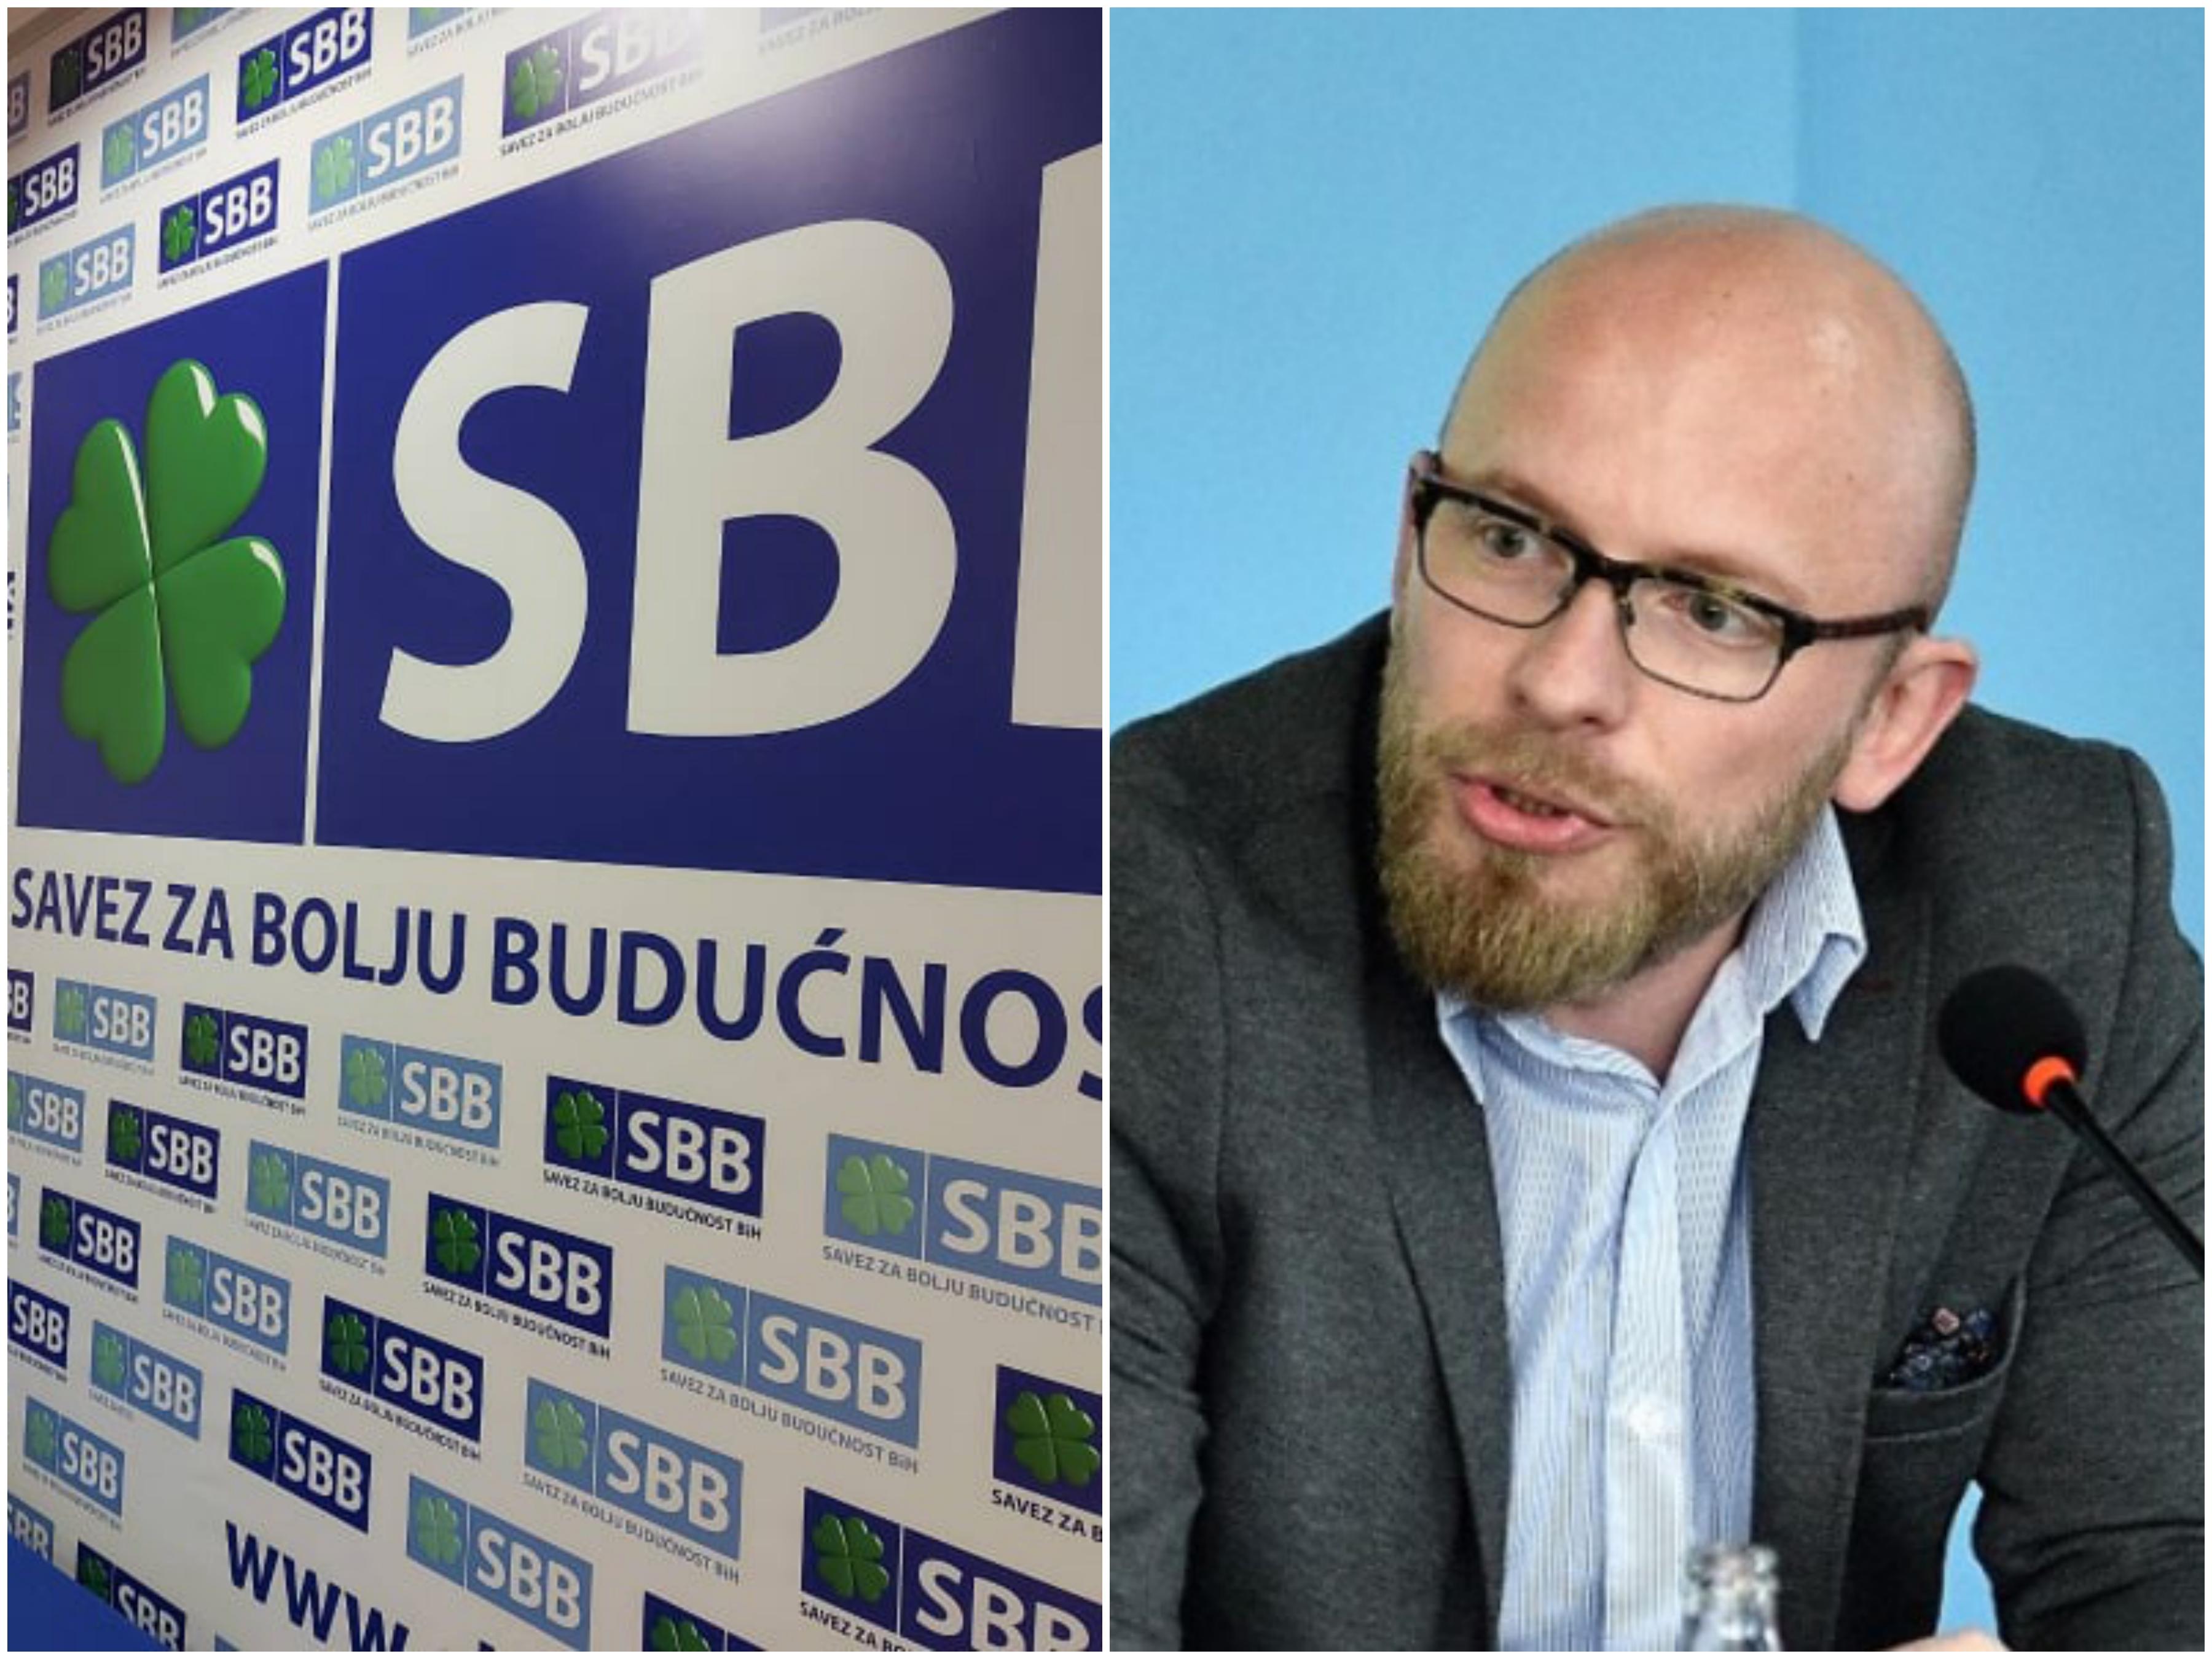 Muhić: We wish Arapović successful work, but SBB will stop the accumulation of functions